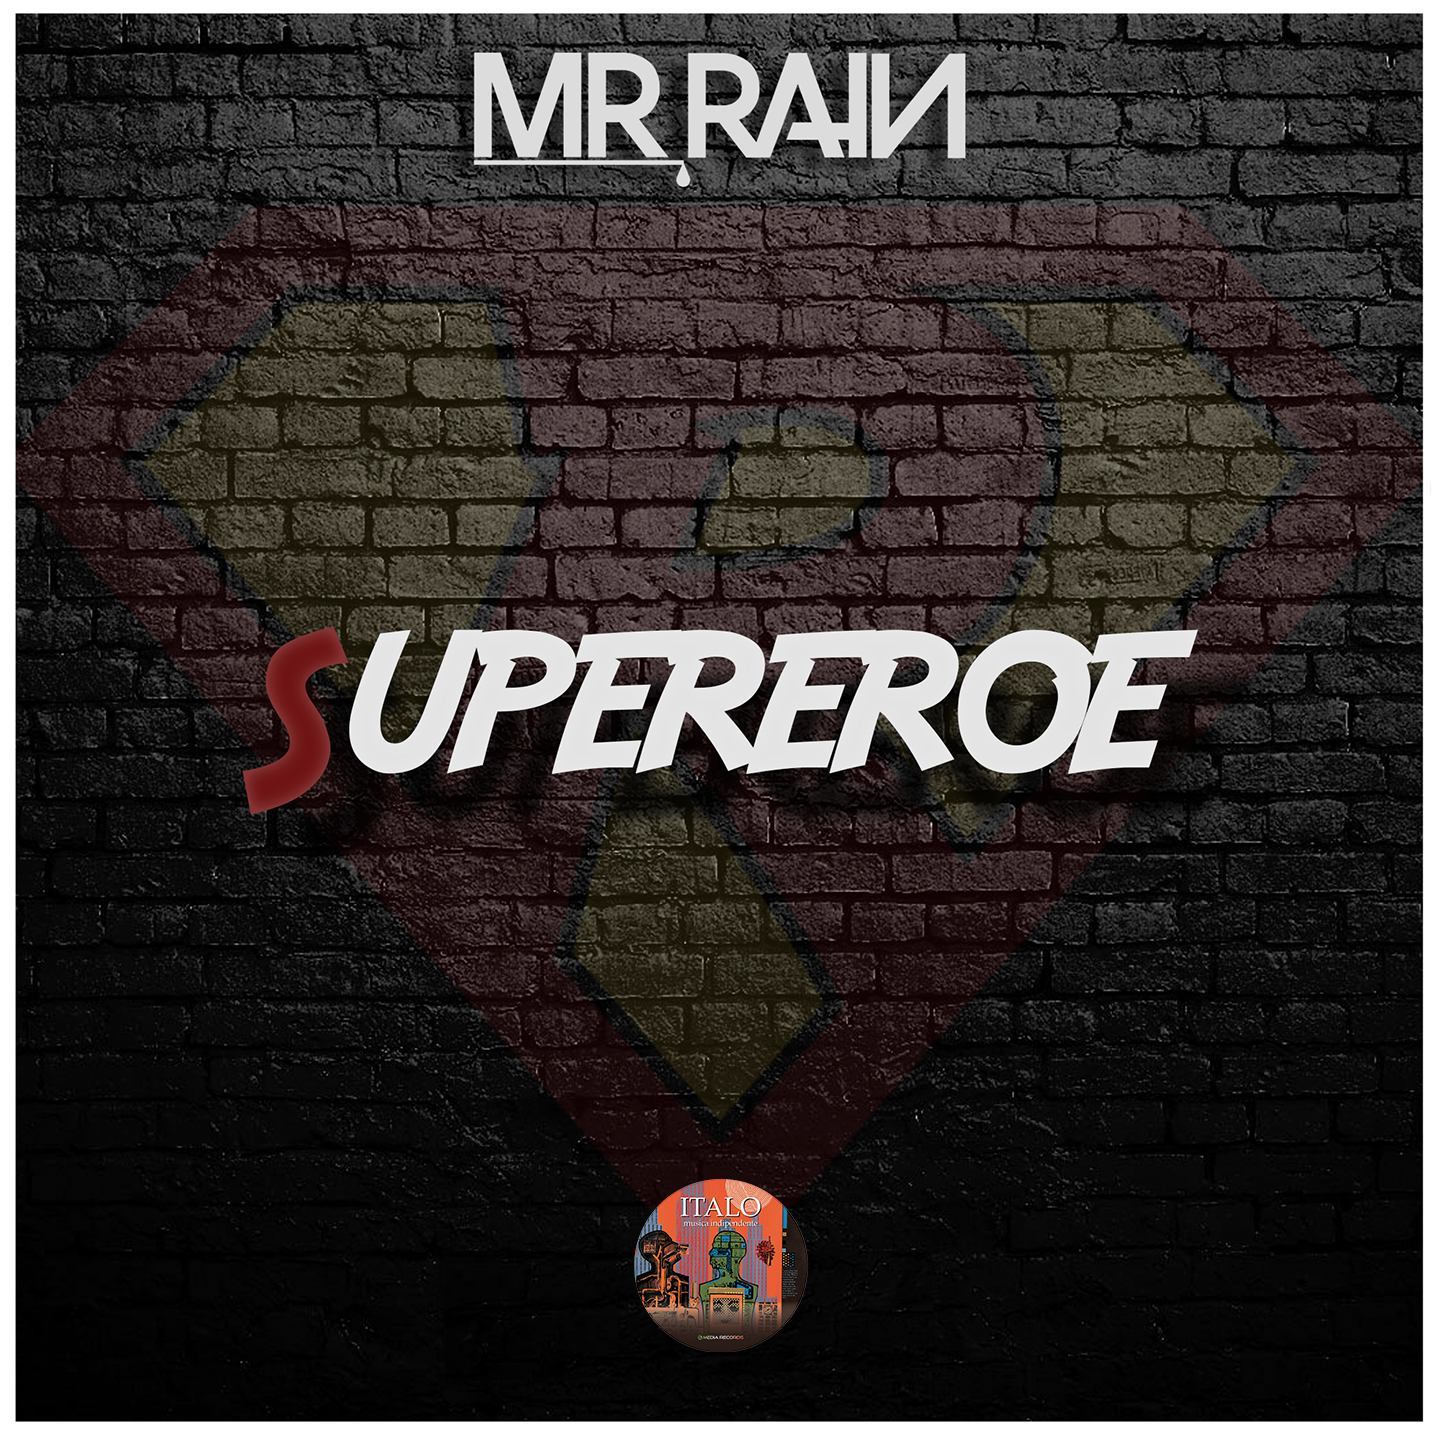 Mr rain. Mr Rain supereroi. Mister Raindrop.